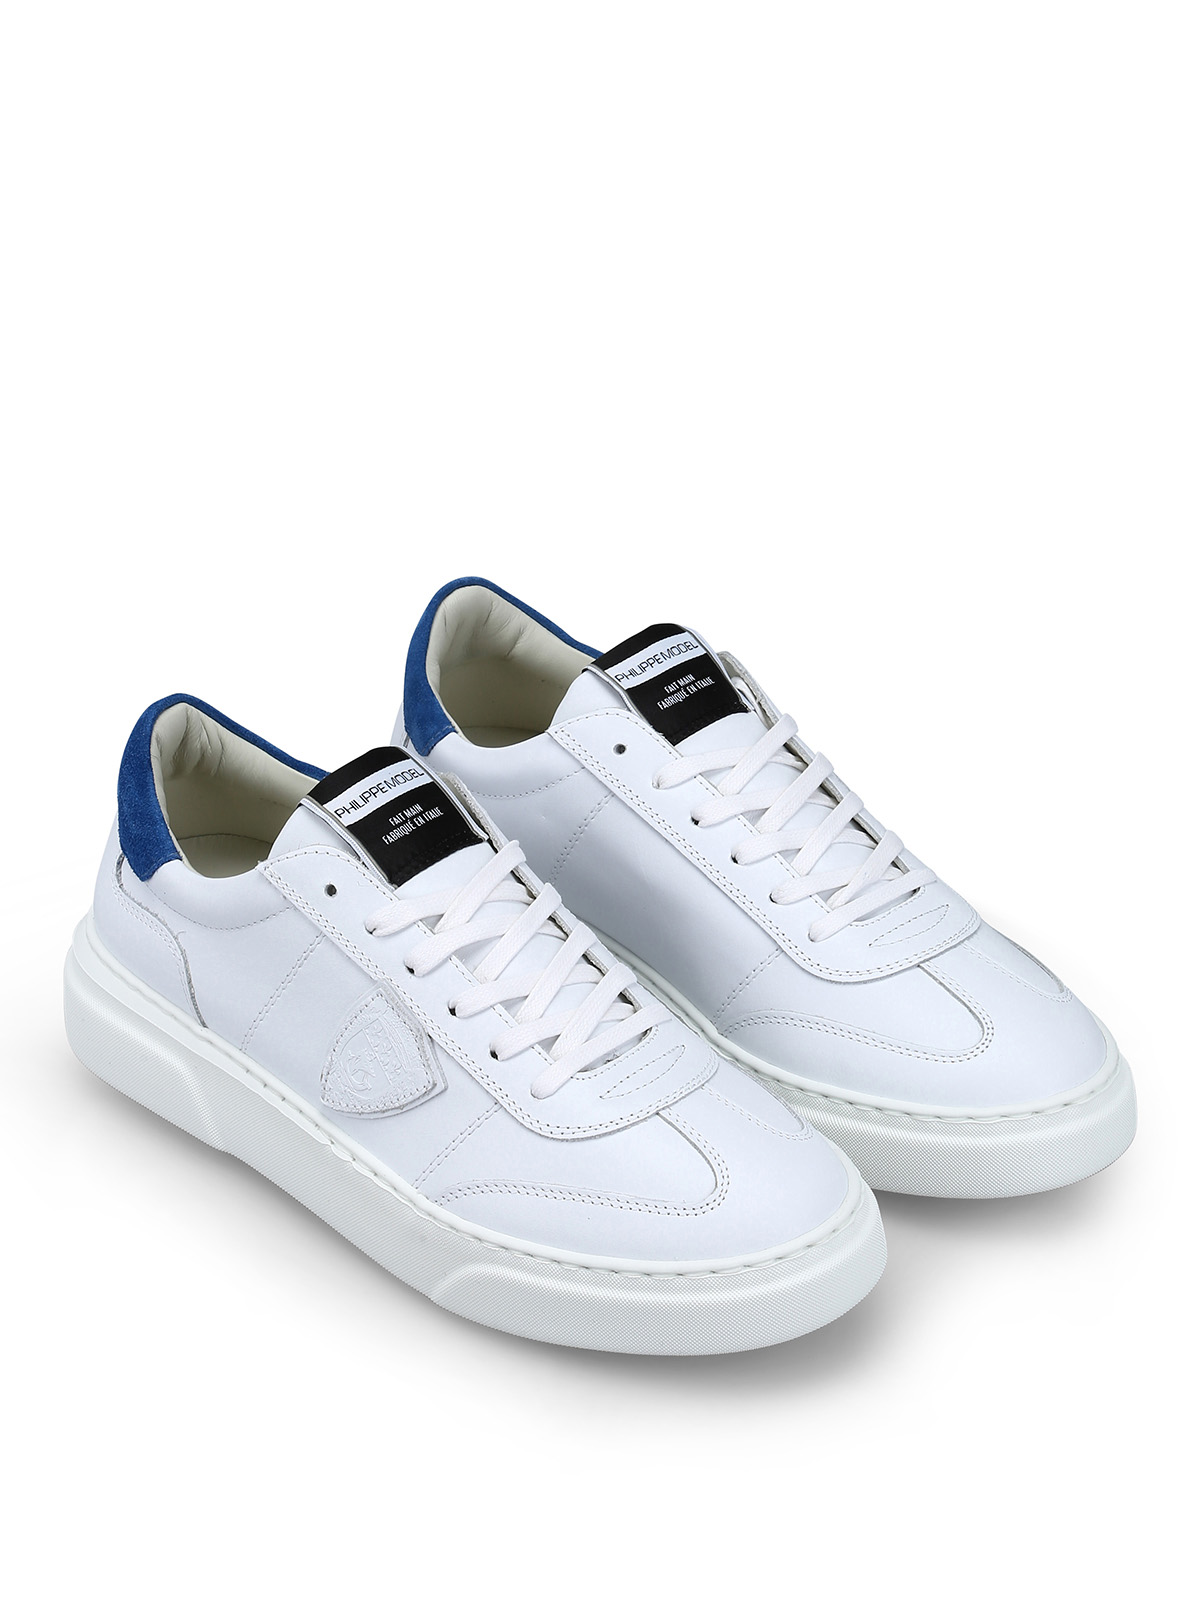 filosofi indkomst Optimistisk Trainers Philippe Model - Temple white leather sneakers - BALUV021